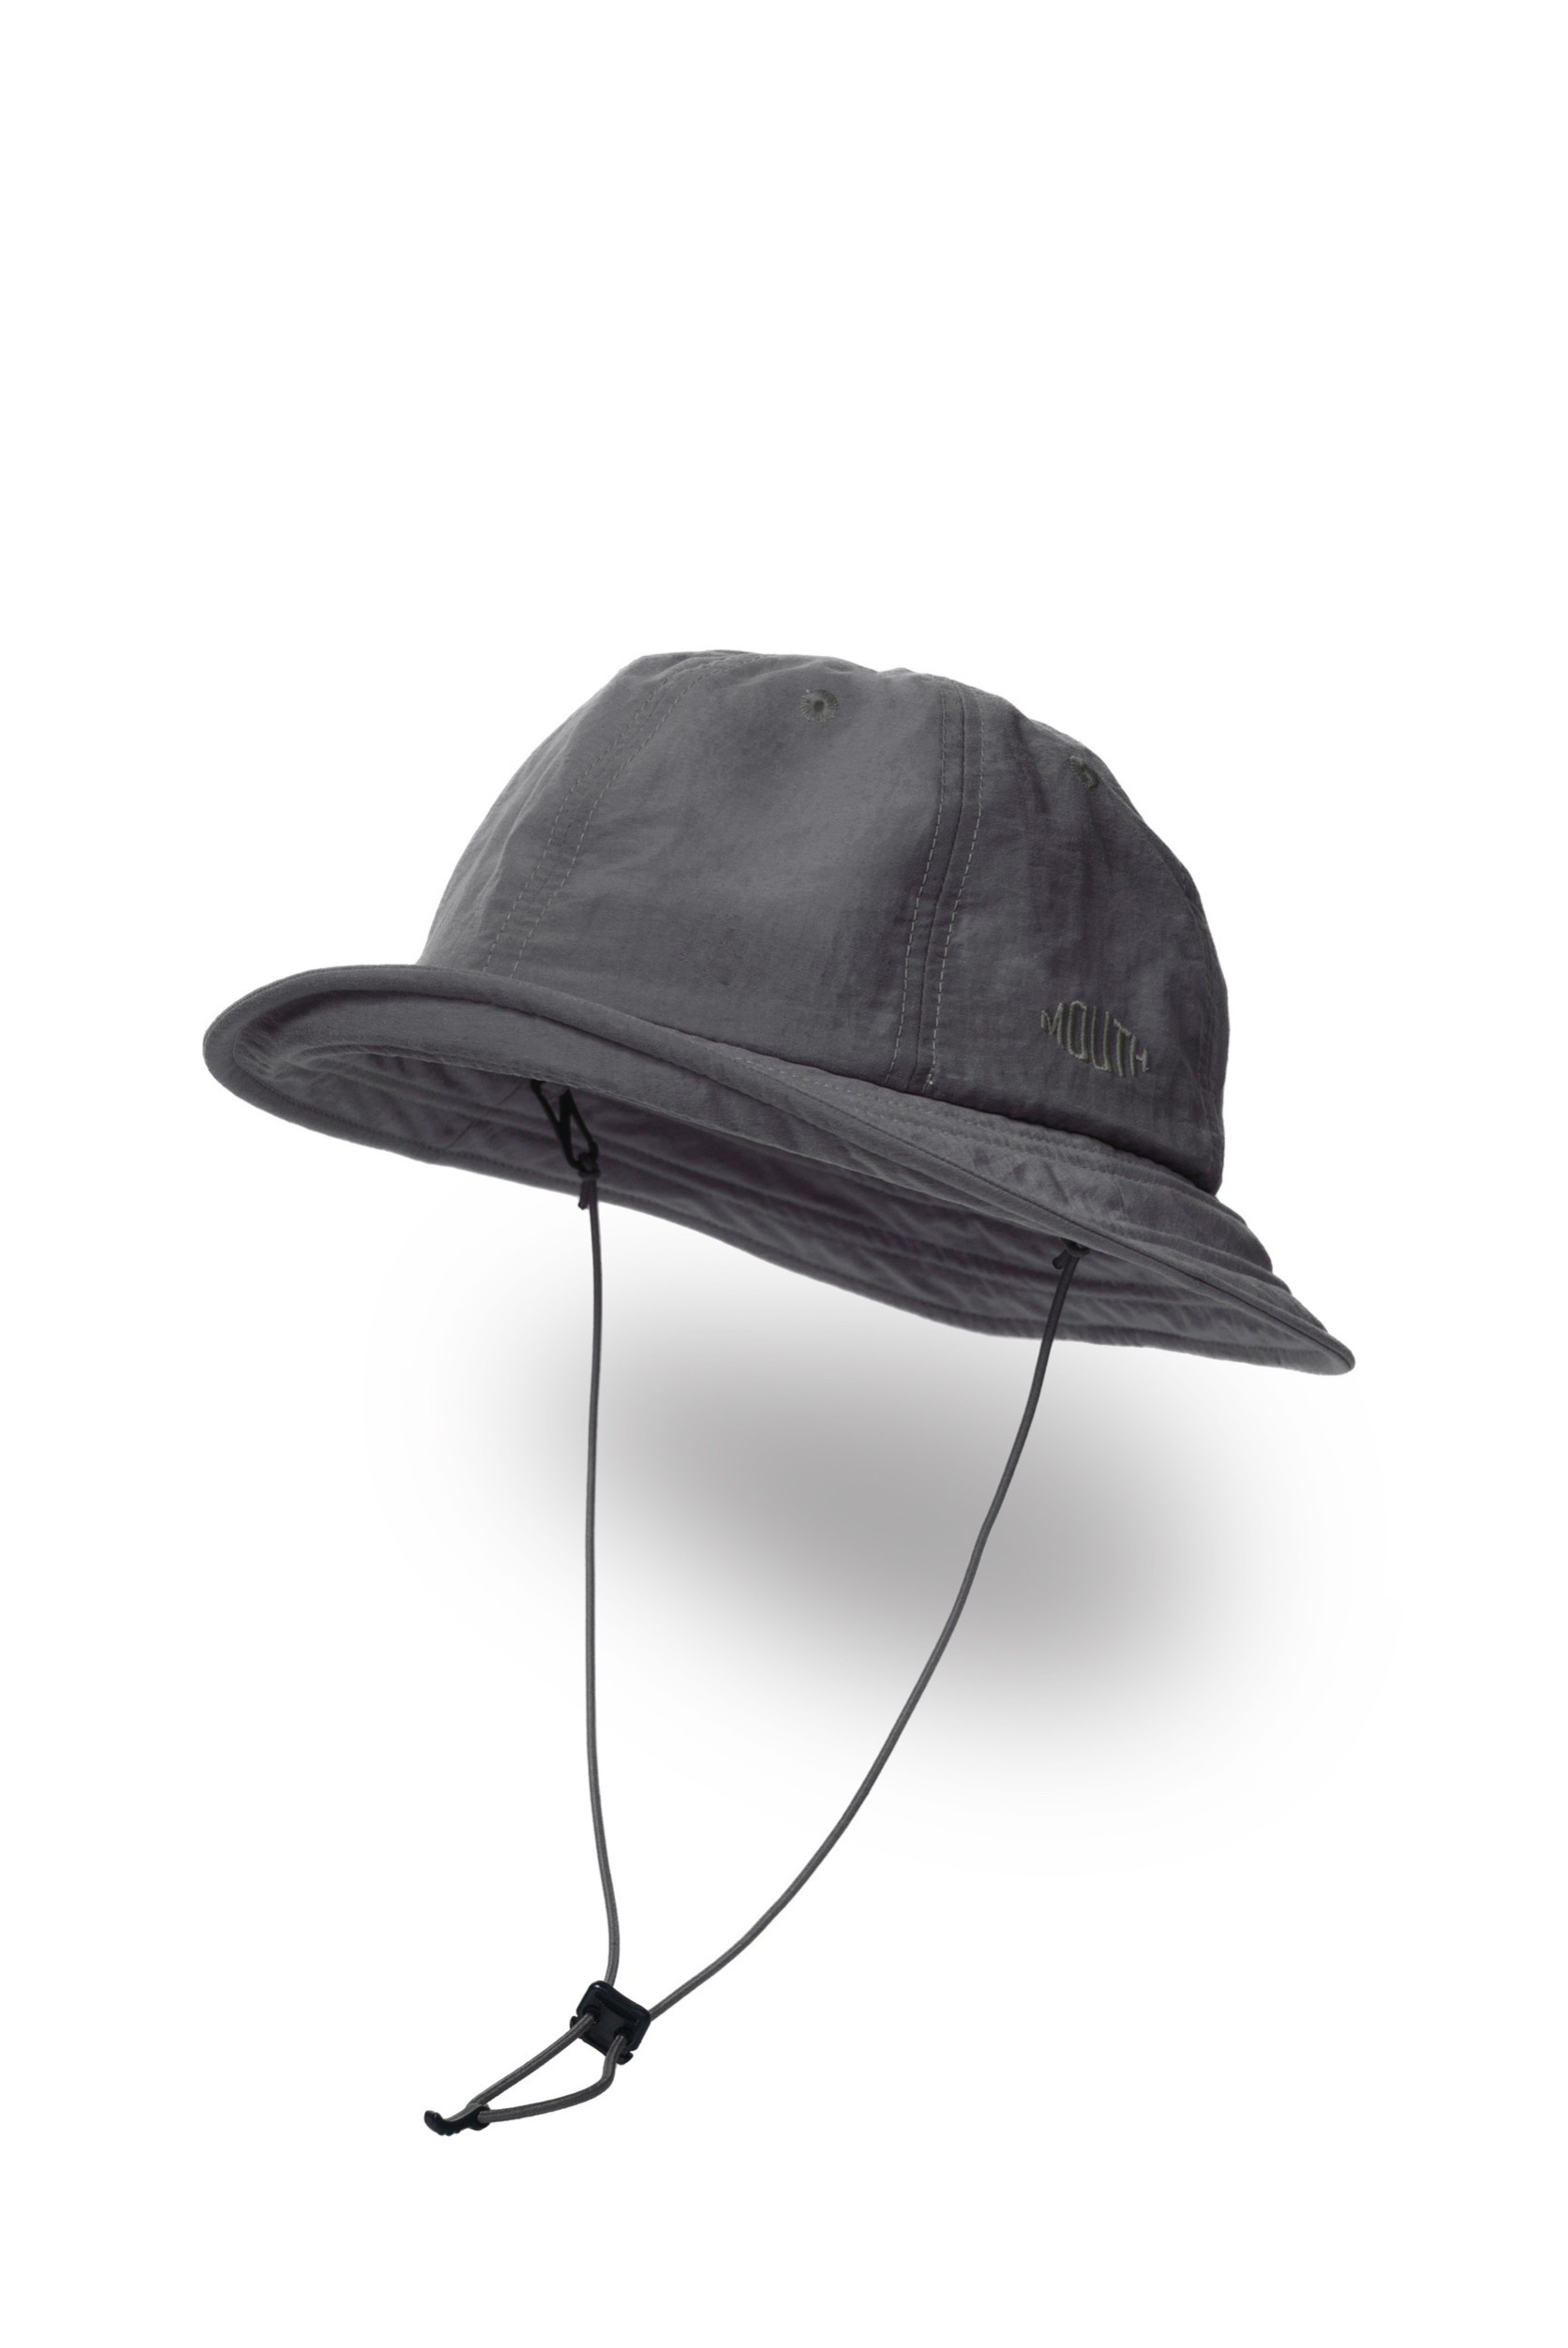 MHW24098 Flex Multi Hat (CHARCOAL) 12月20日12:00発売 メール便送料無料